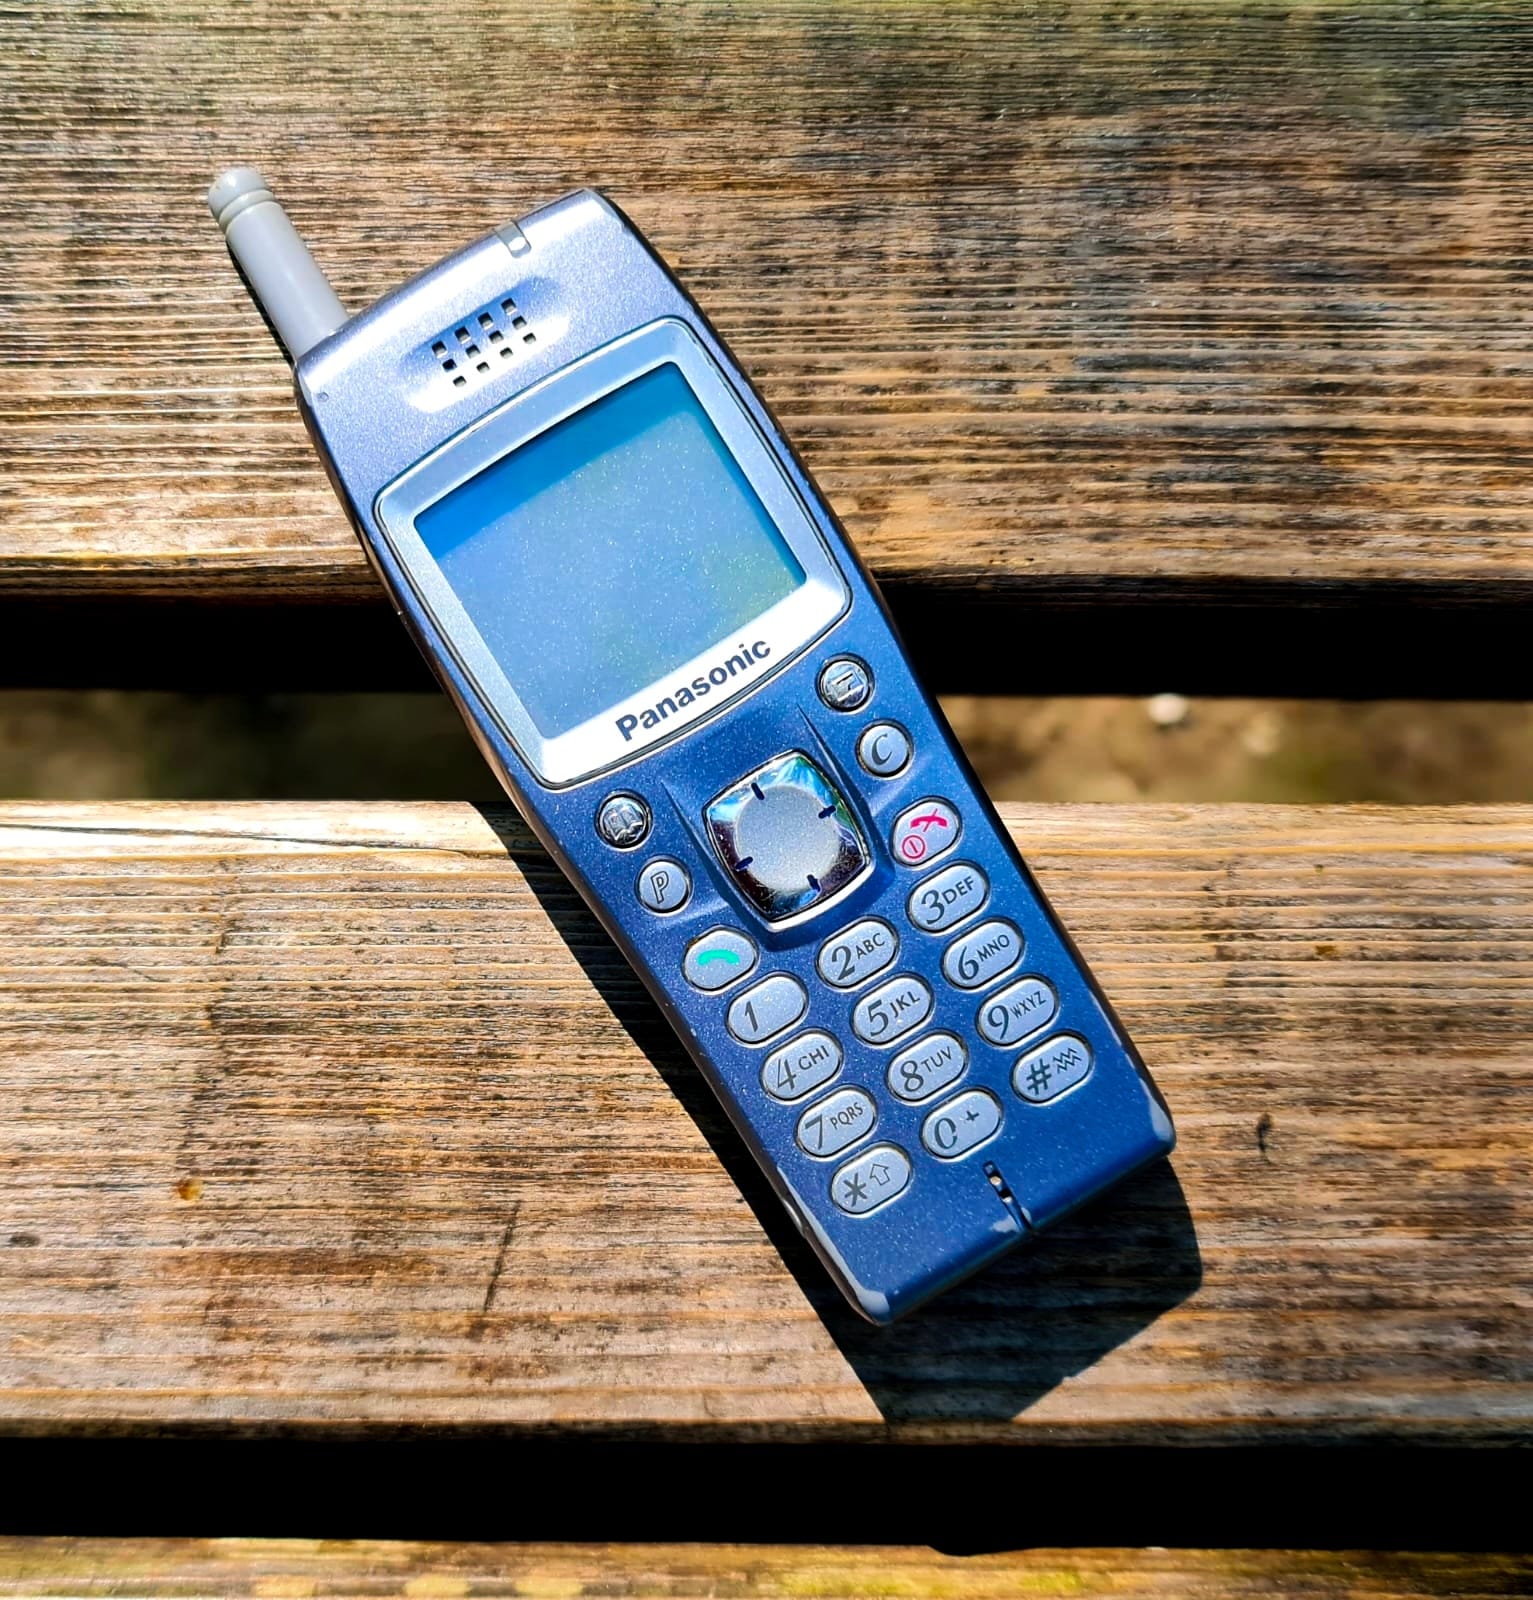 ___Antik-celulare-dures-telefona-193